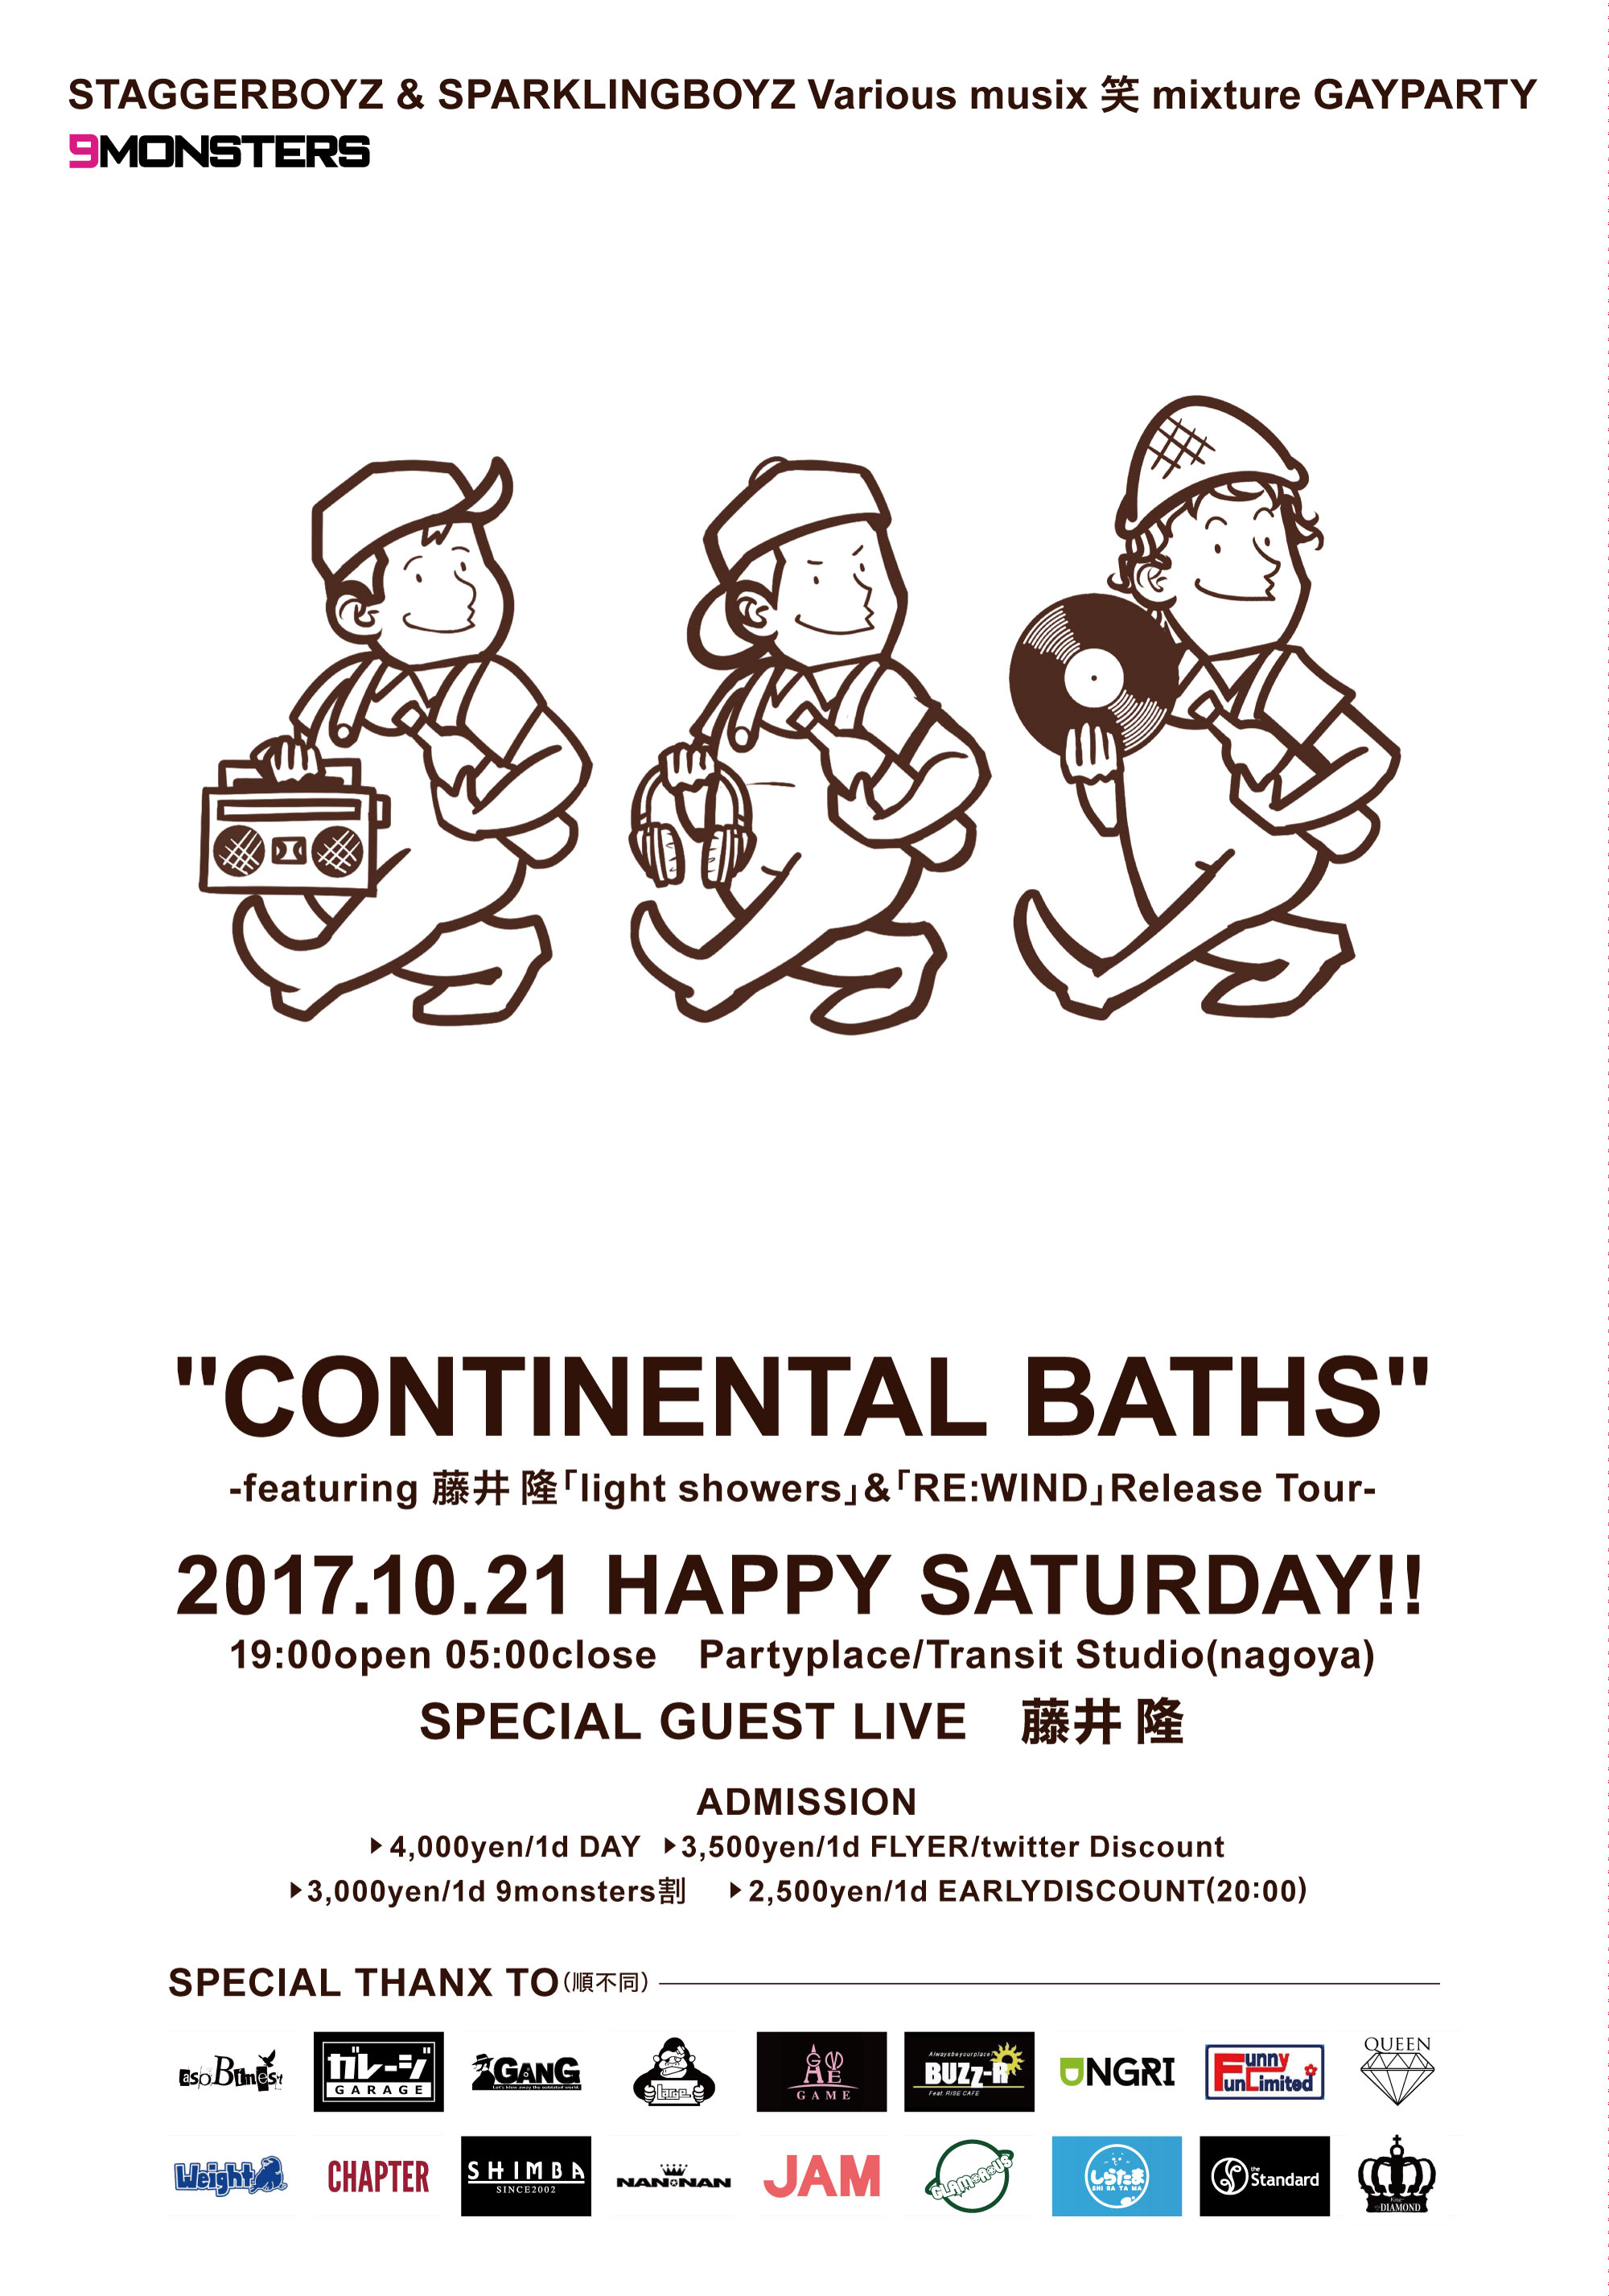 CONTINENTAL BATH vol.1